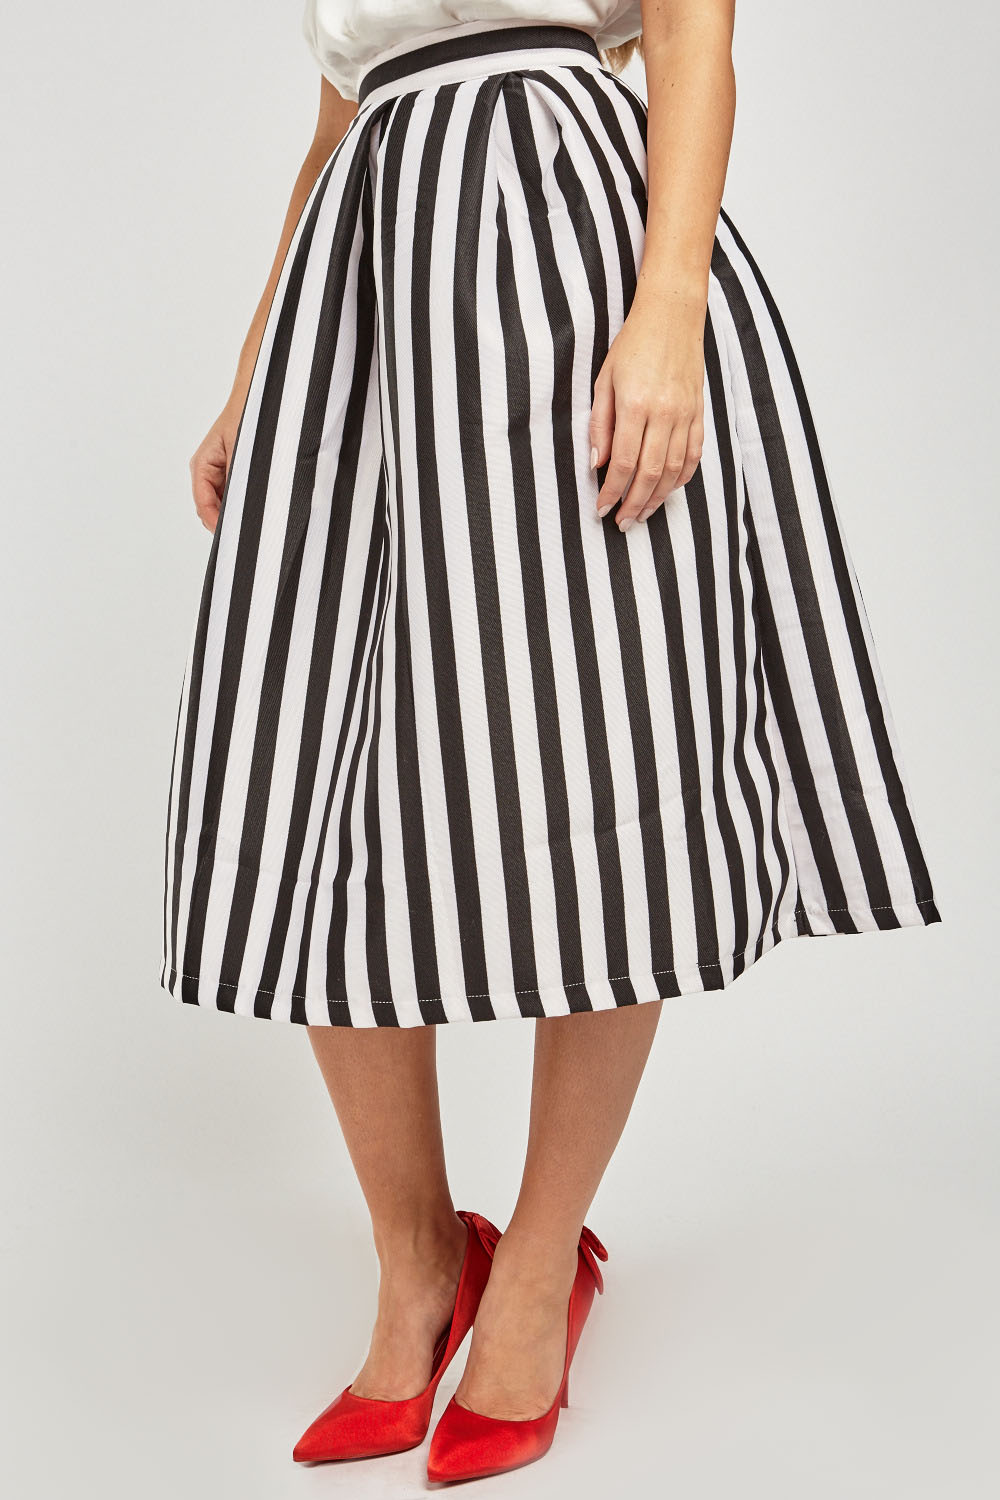 High Waist Striped Midi Skirt - Just $7